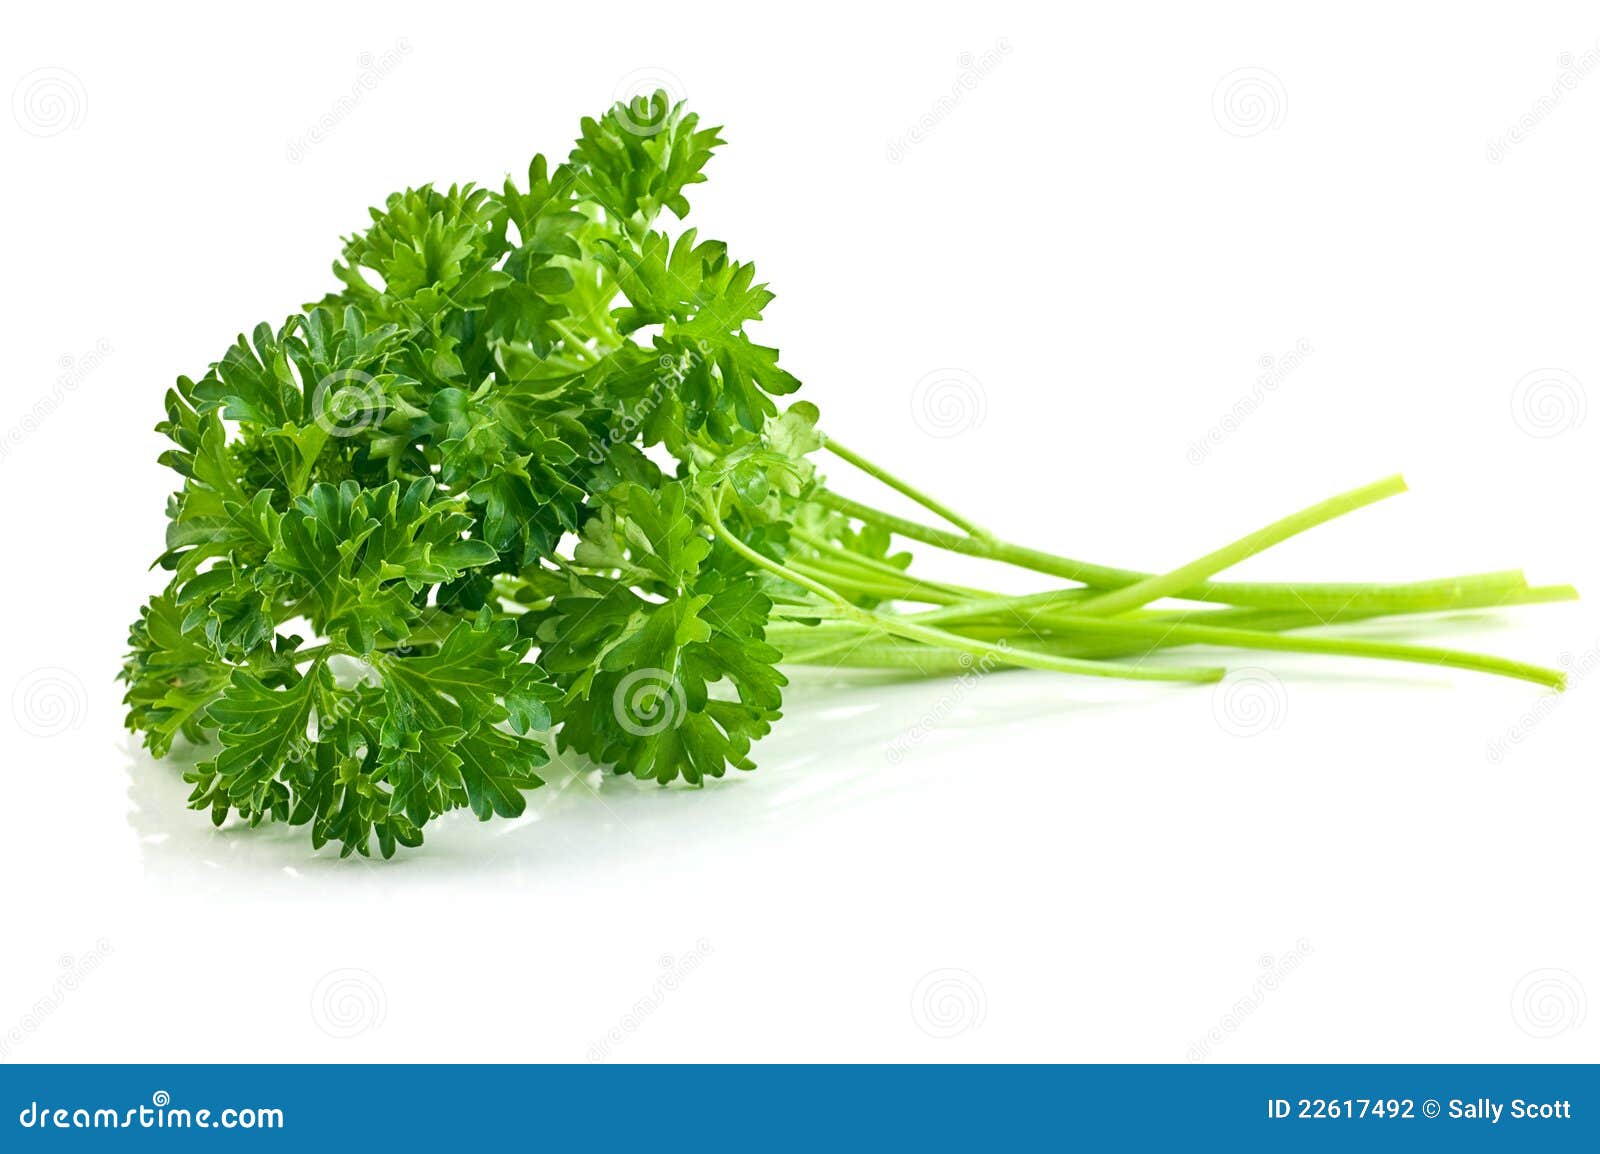 parsley sprigs